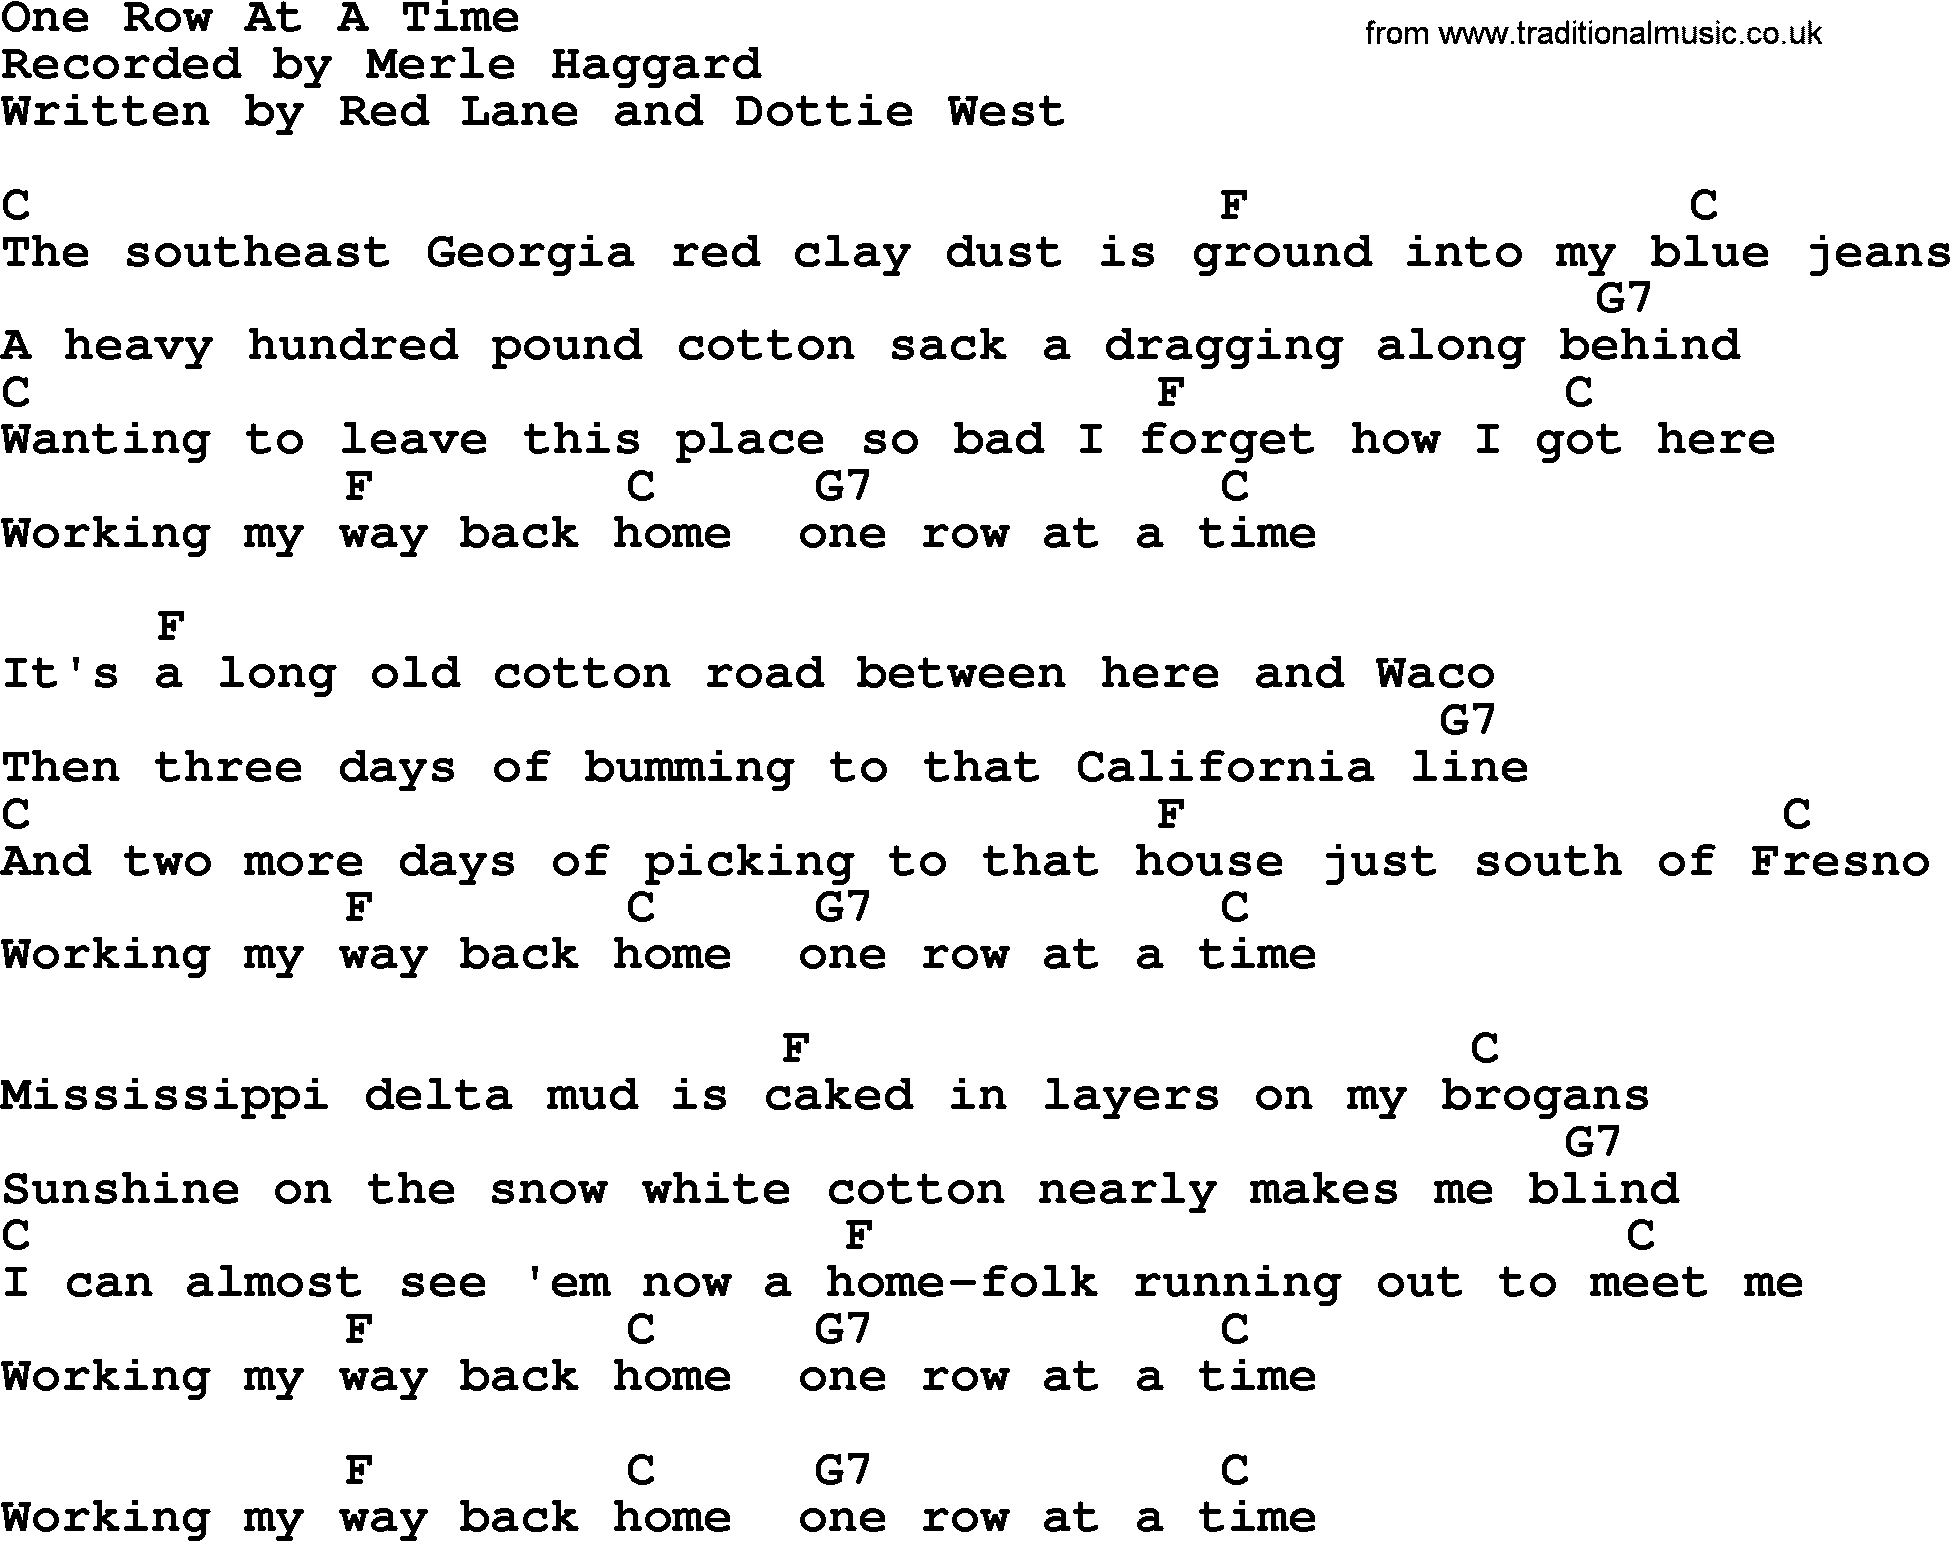 Merle Haggard song: One Row At A Time, lyrics and chords